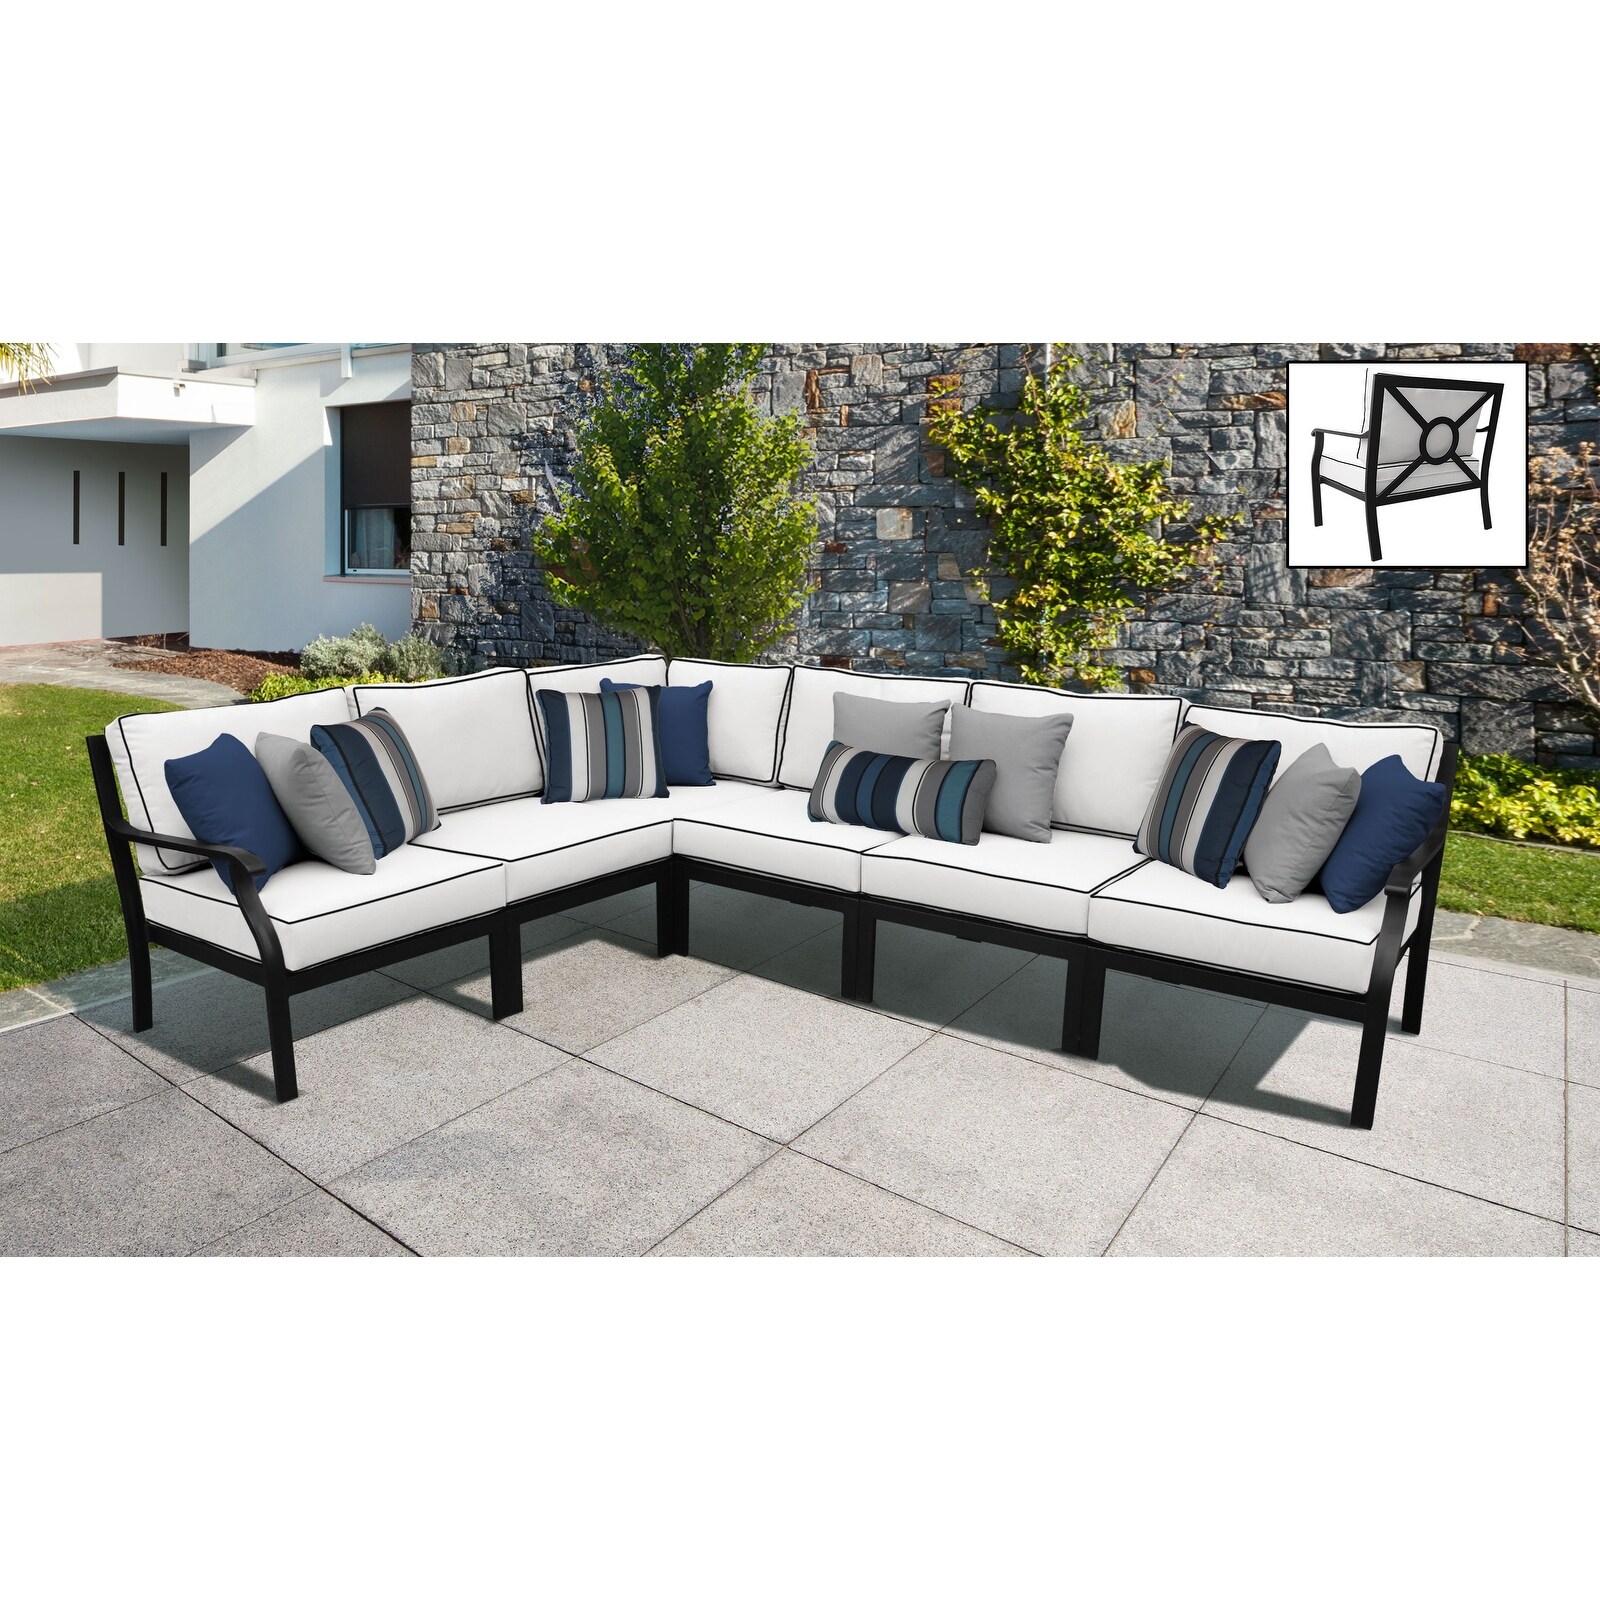 Kathy Ireland Madison Ave. 6-piece Outdoor Patio Furniture Set